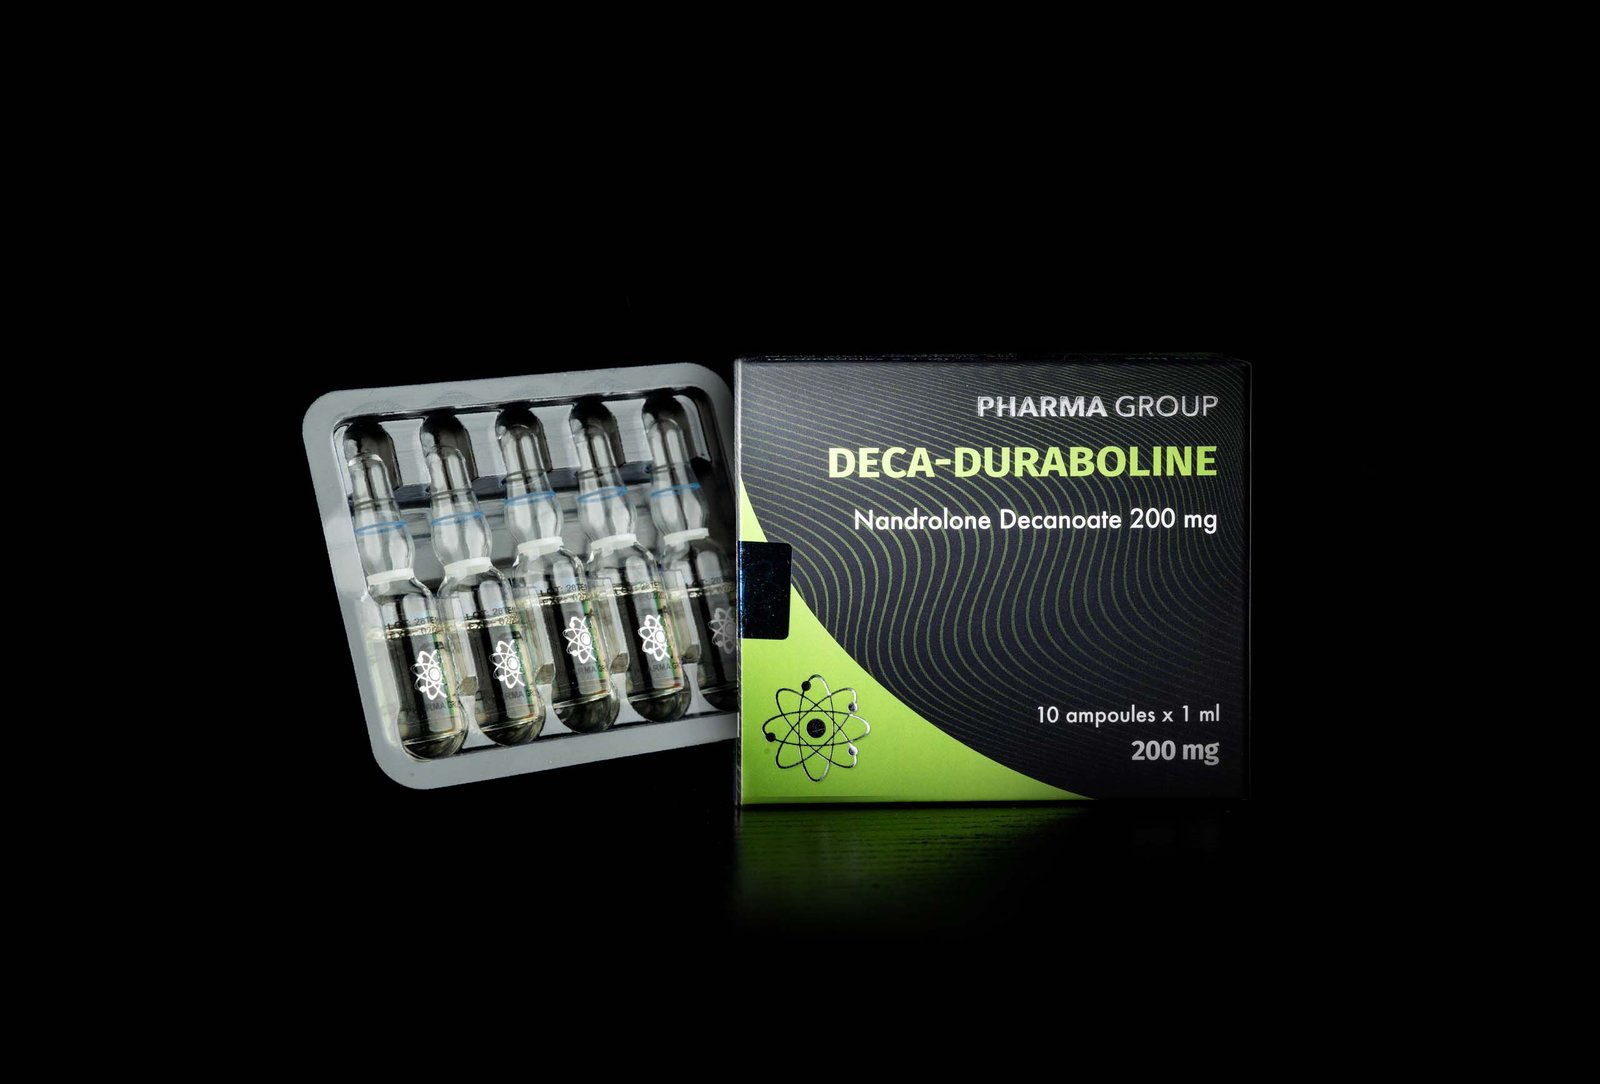 Pharma Group Deca-Duraboline 200